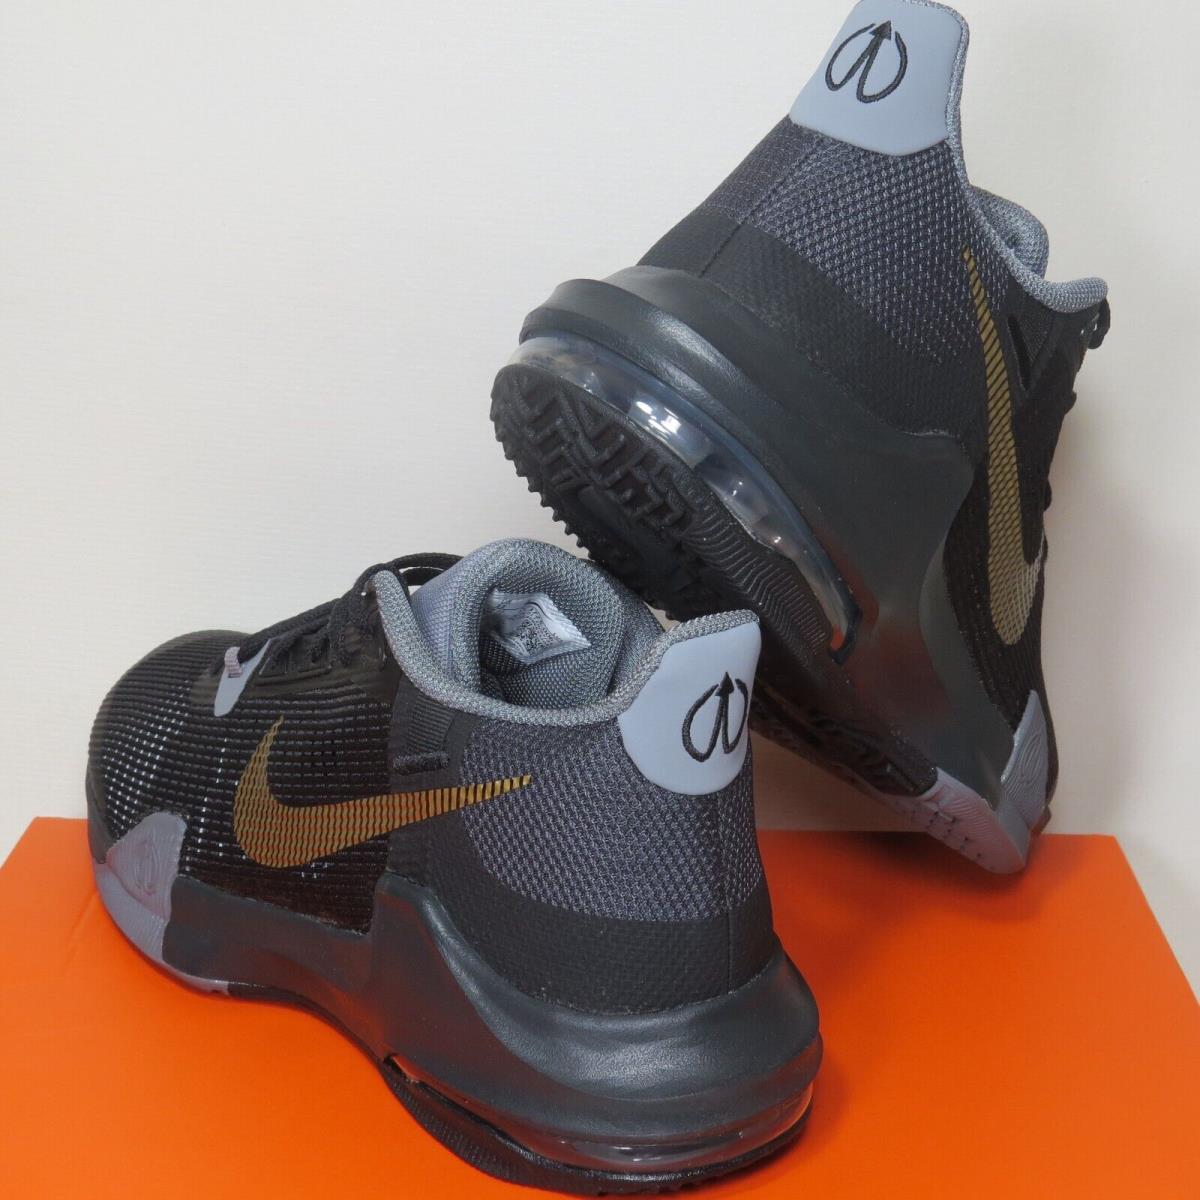 Nike shoes Air Max Impact - Black 4